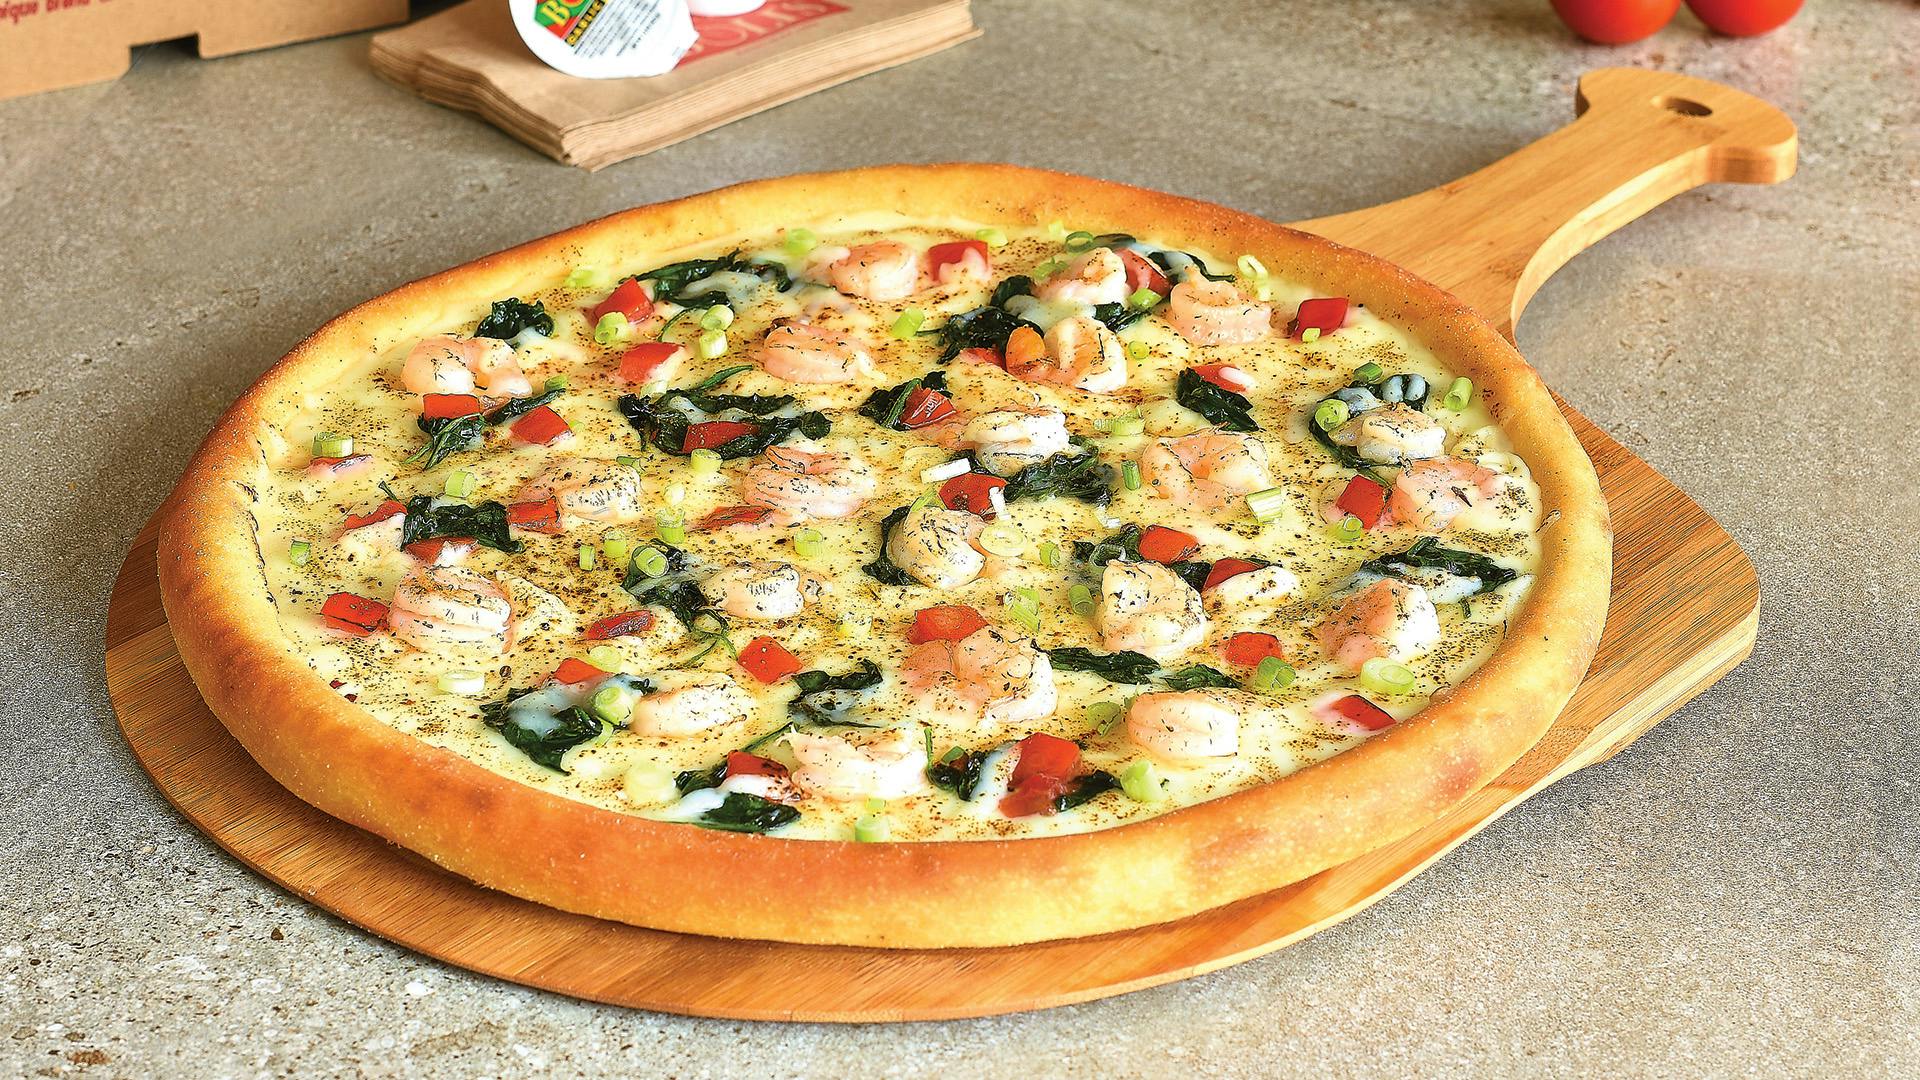 SHRIMP ALFREDO PIZZA from Boli's Pizza in Washington, DC